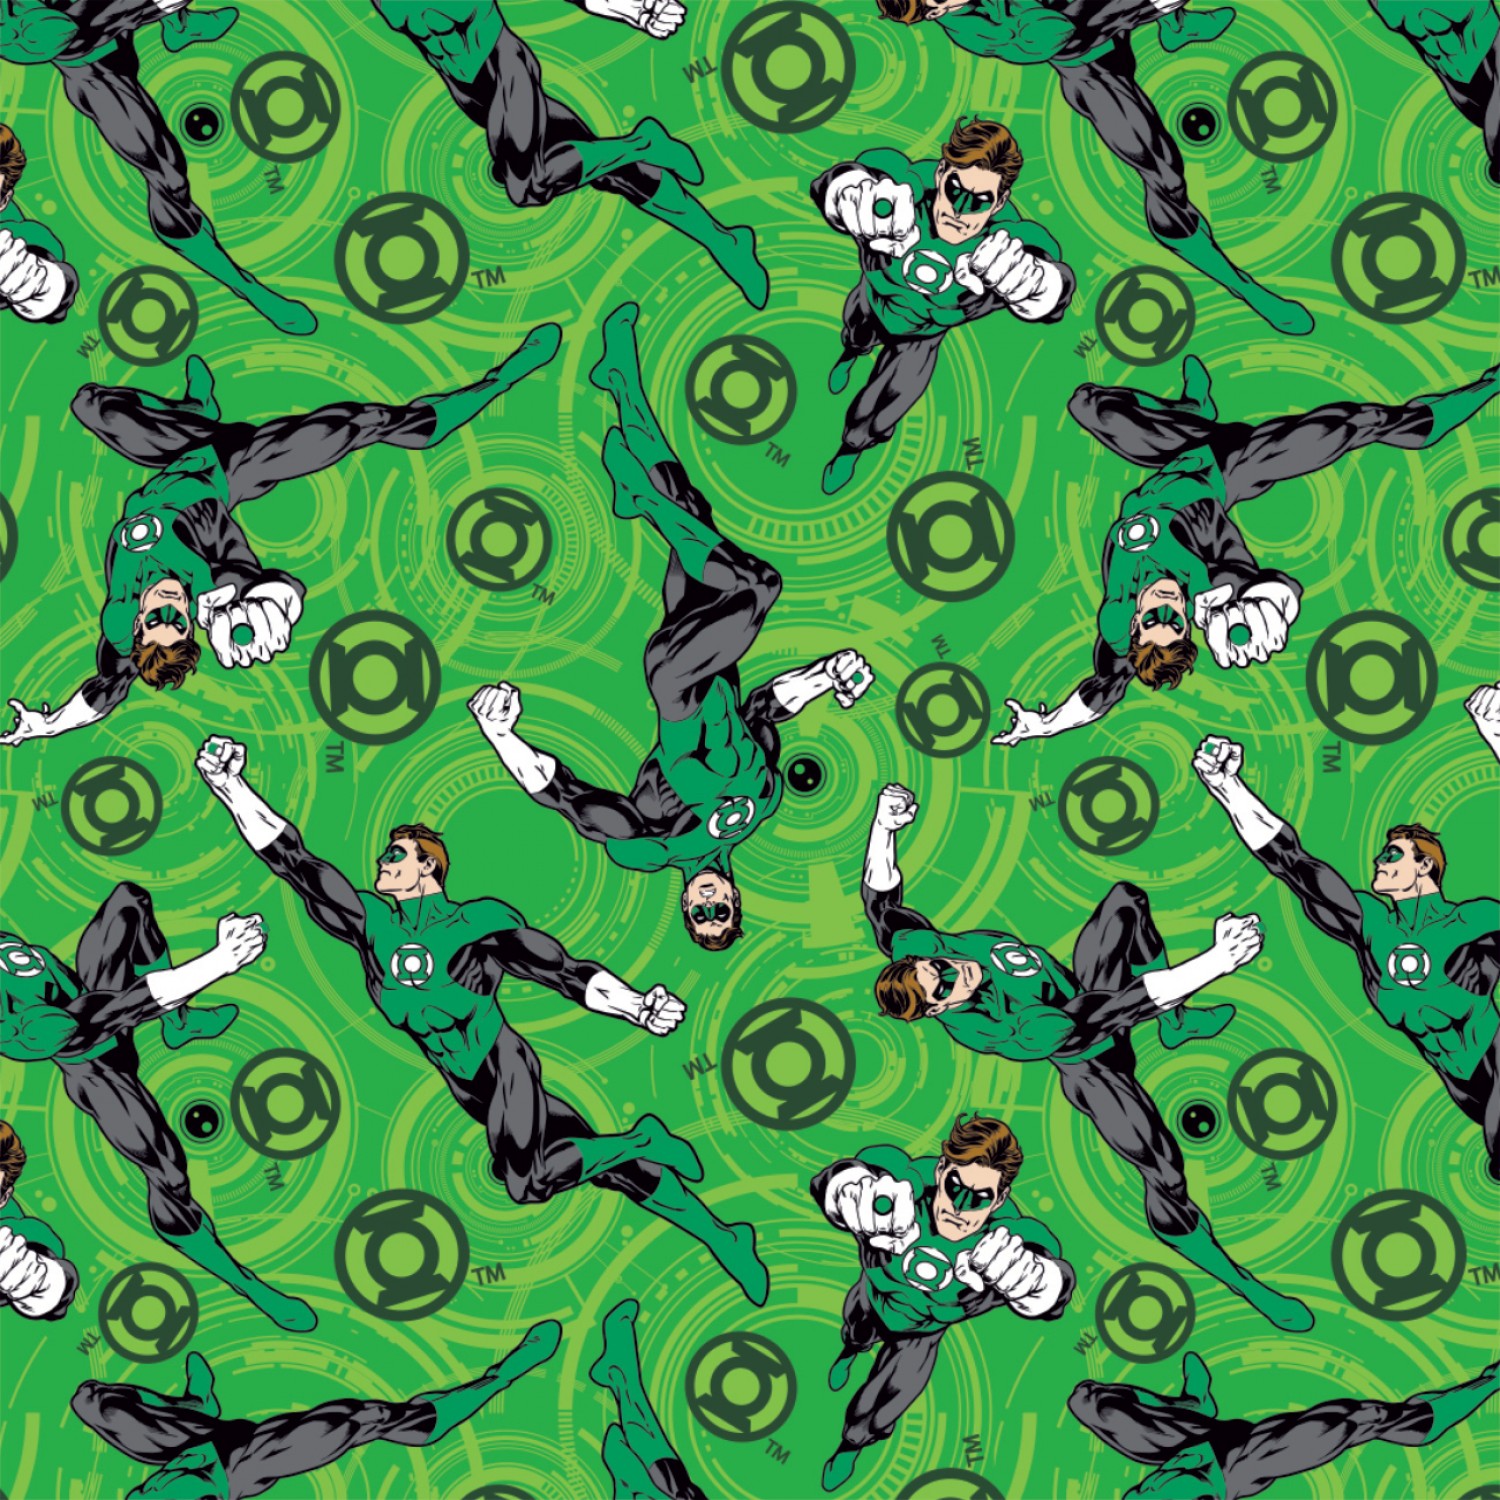 DC Comics Green Lantern Core Energy Fabric - Green